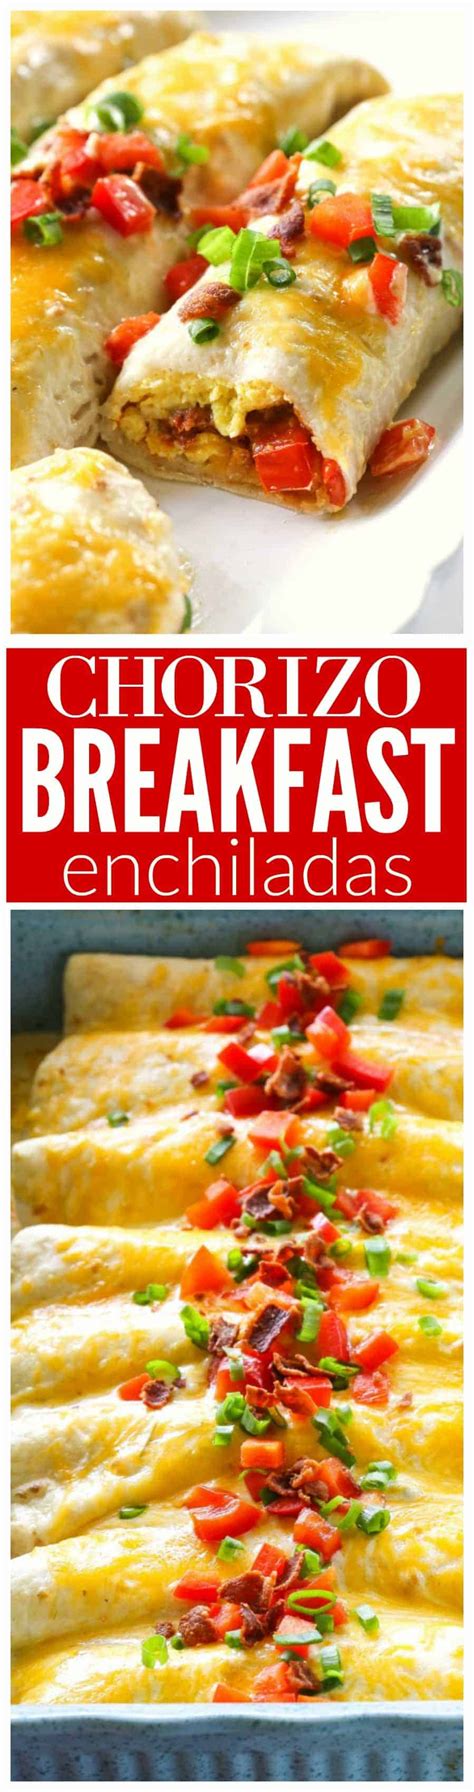 chorizo-breakfast-enchiladas-the-girl-who-ate image